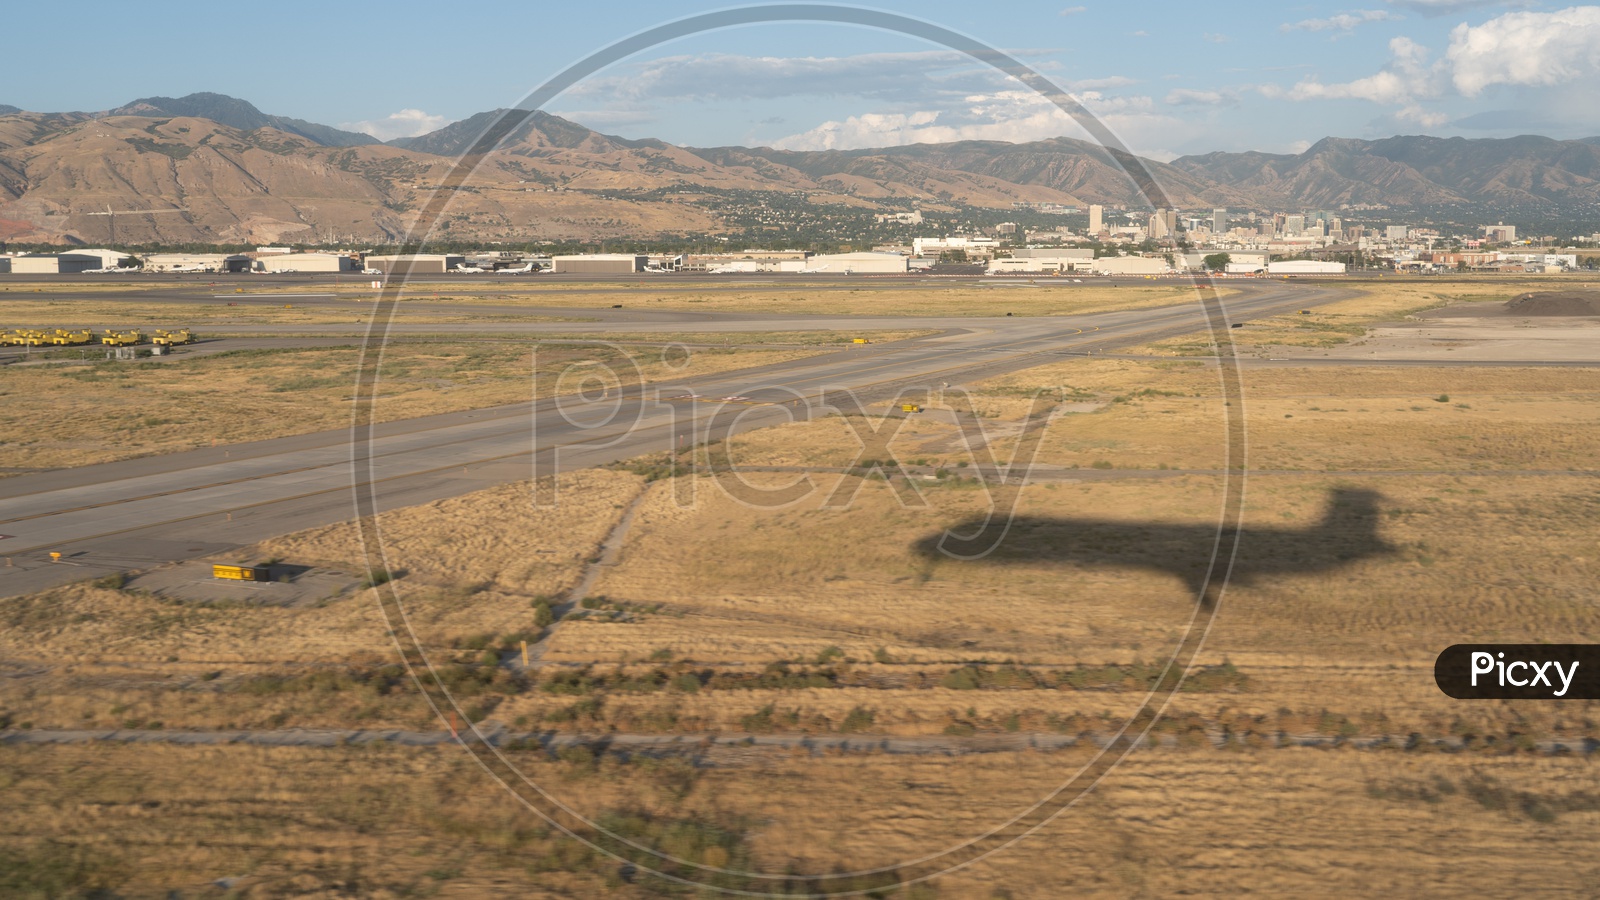 Shadow of Airplane over the empty land, Salt Lake City, Utah